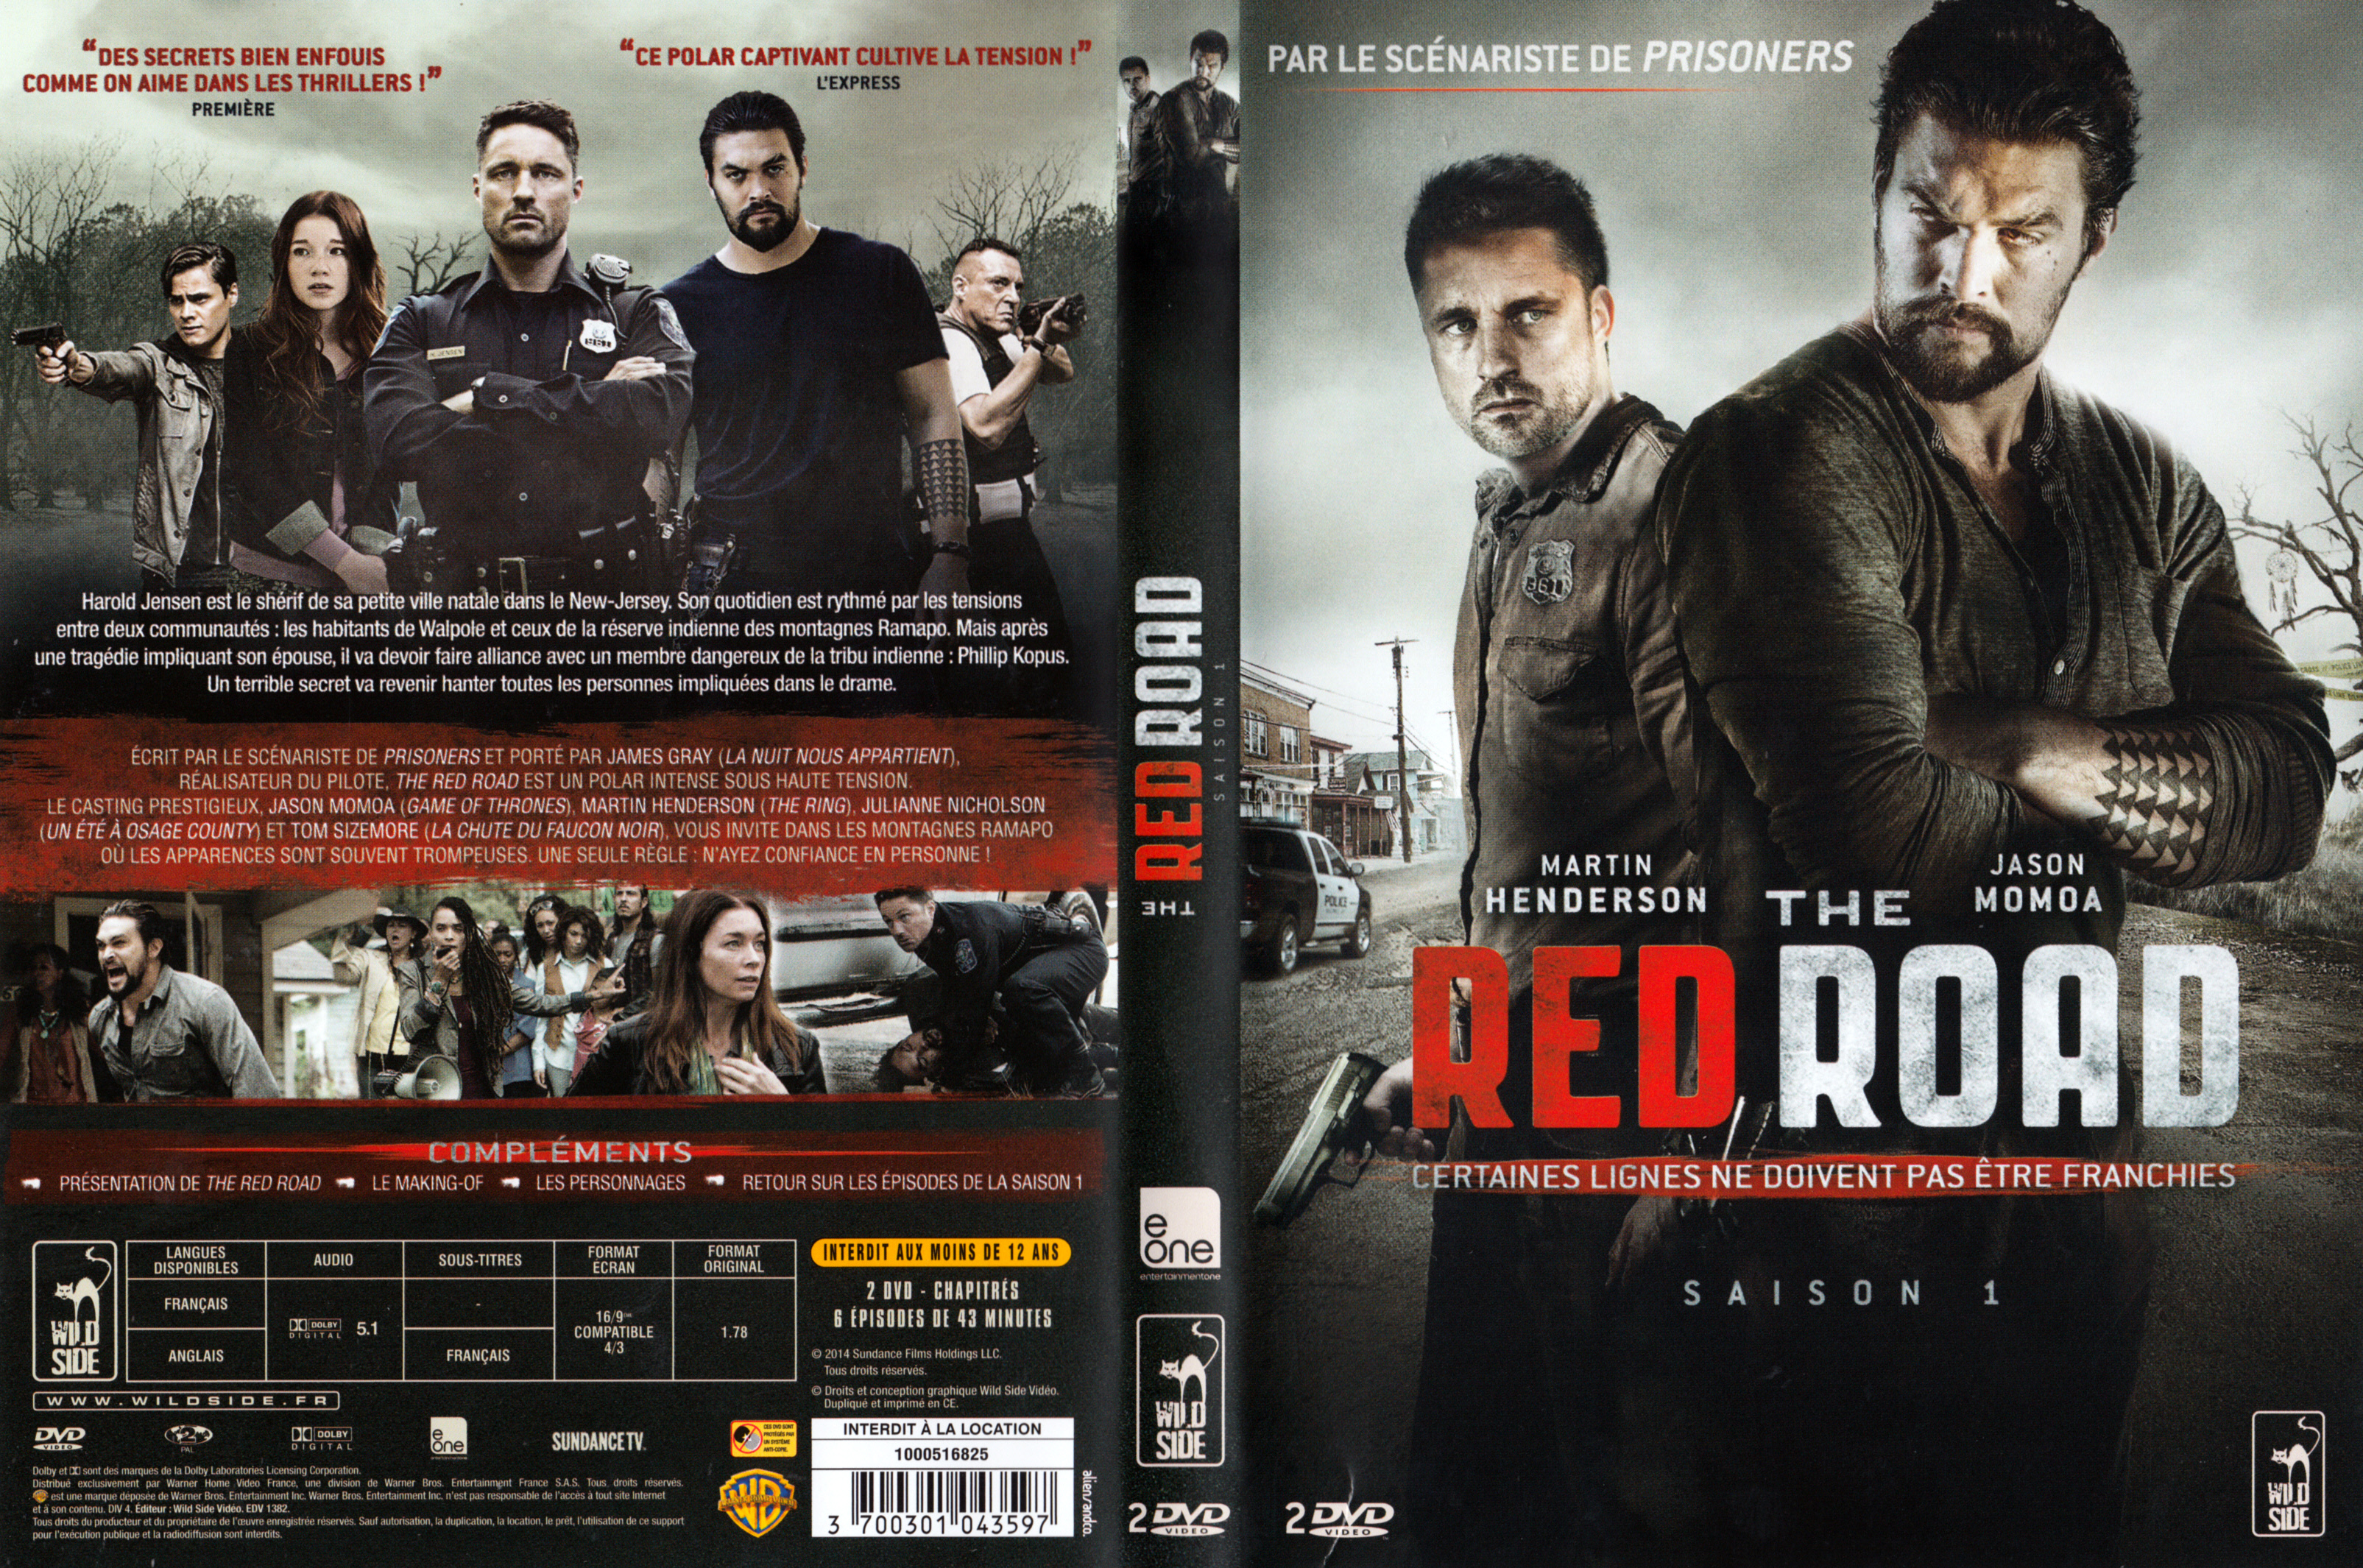 Jaquette DVD Red Road Saison 1